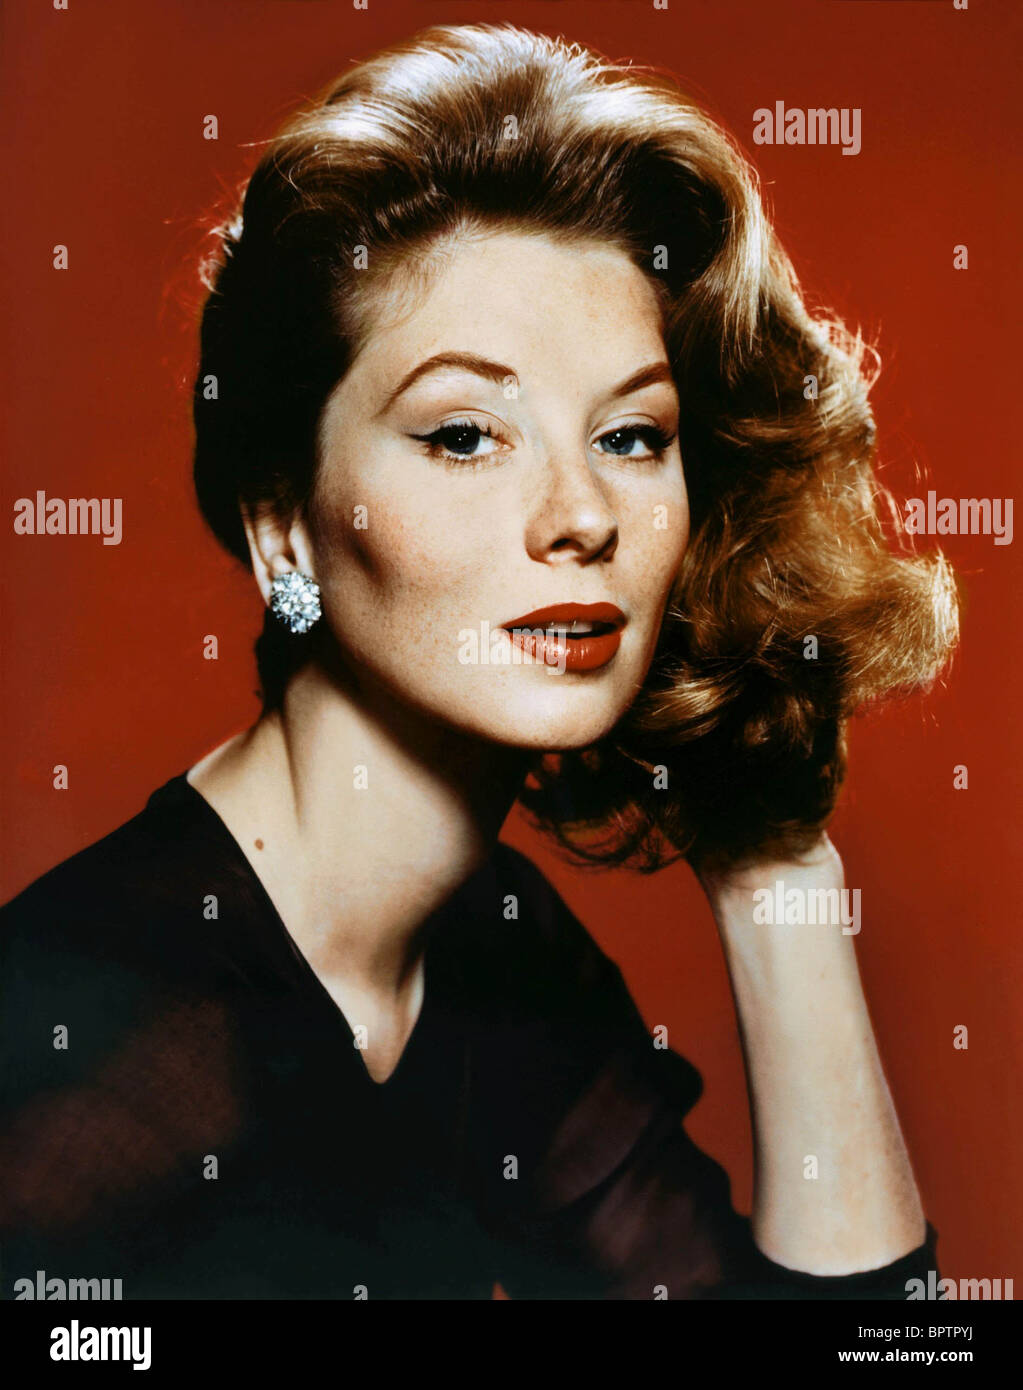 SUZY PARKER ACTRESS (1962) Stock Photo